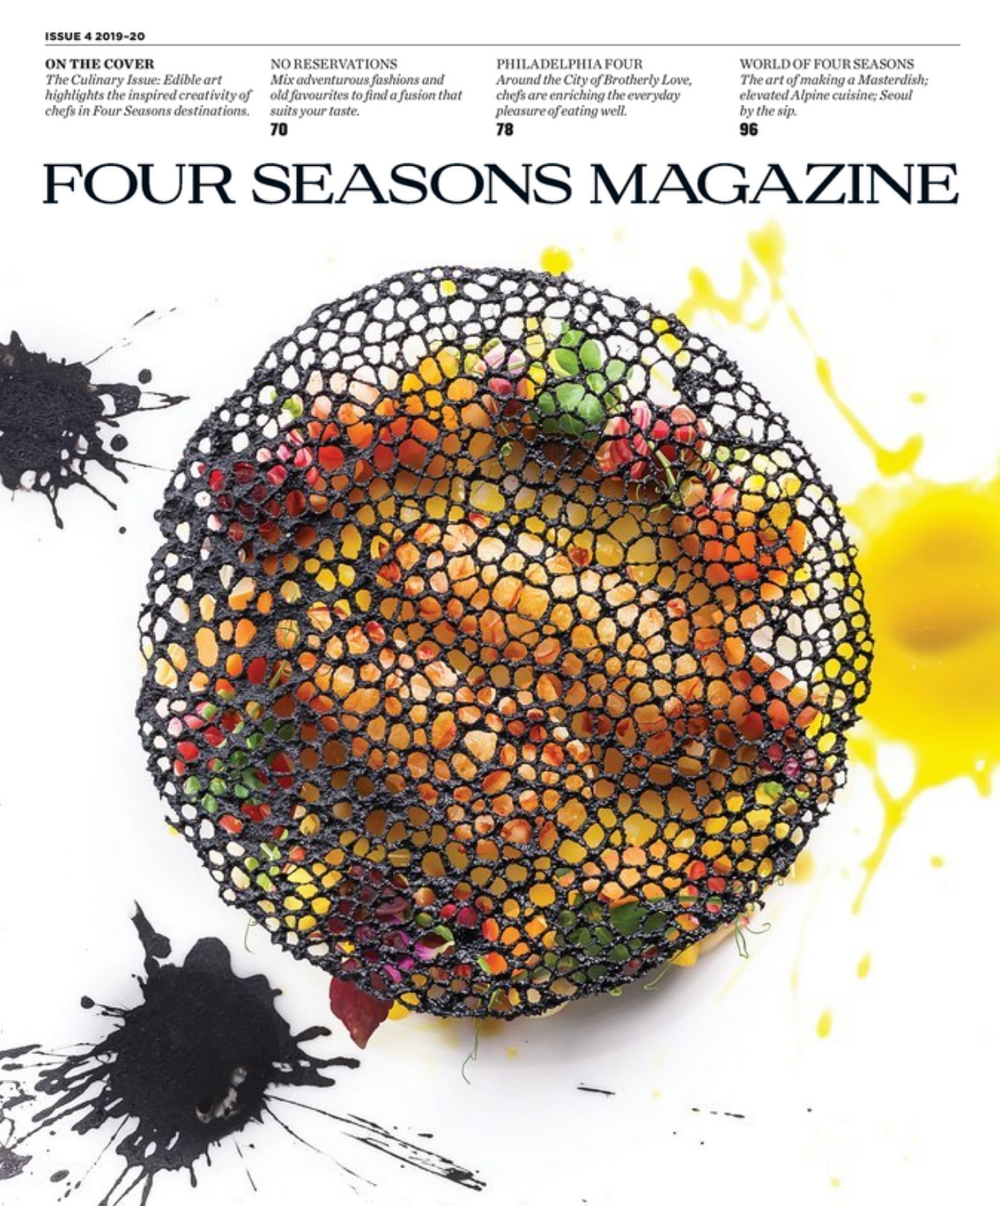 Four Seasons Holiday Magazine Cover